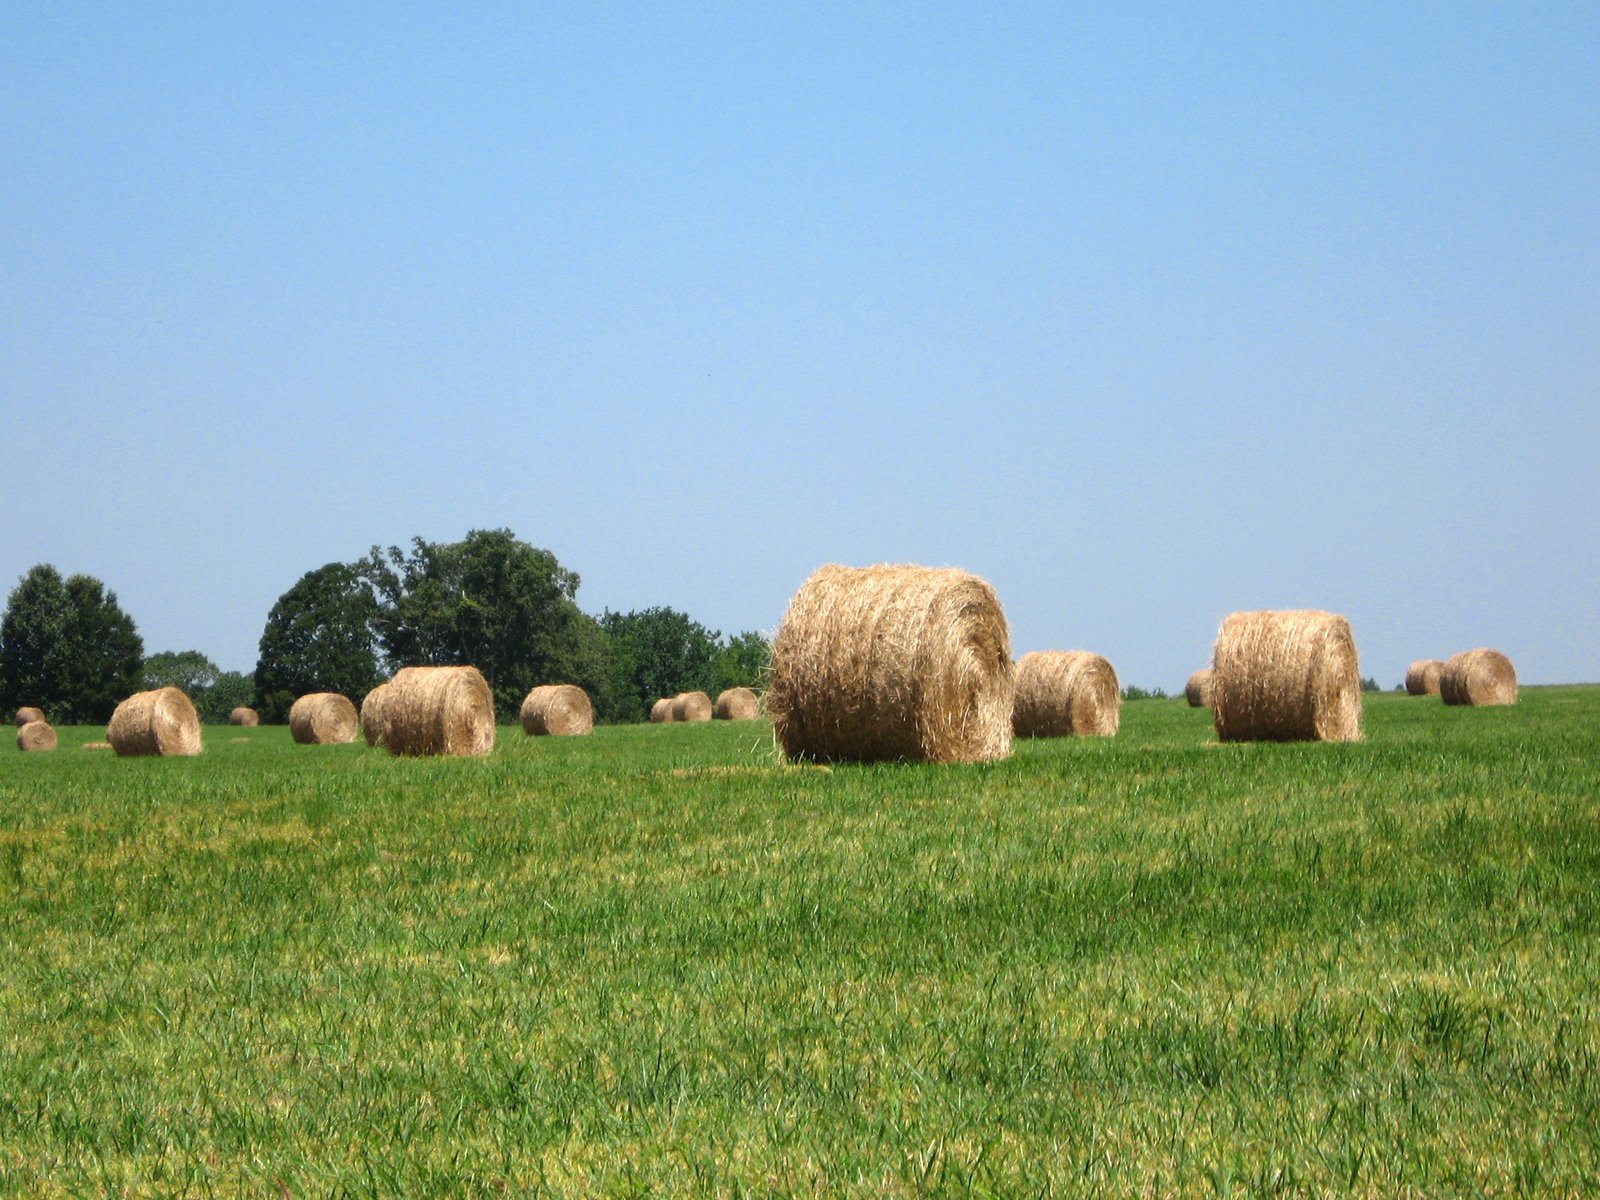 a bunch of hay rolls in a grassy field